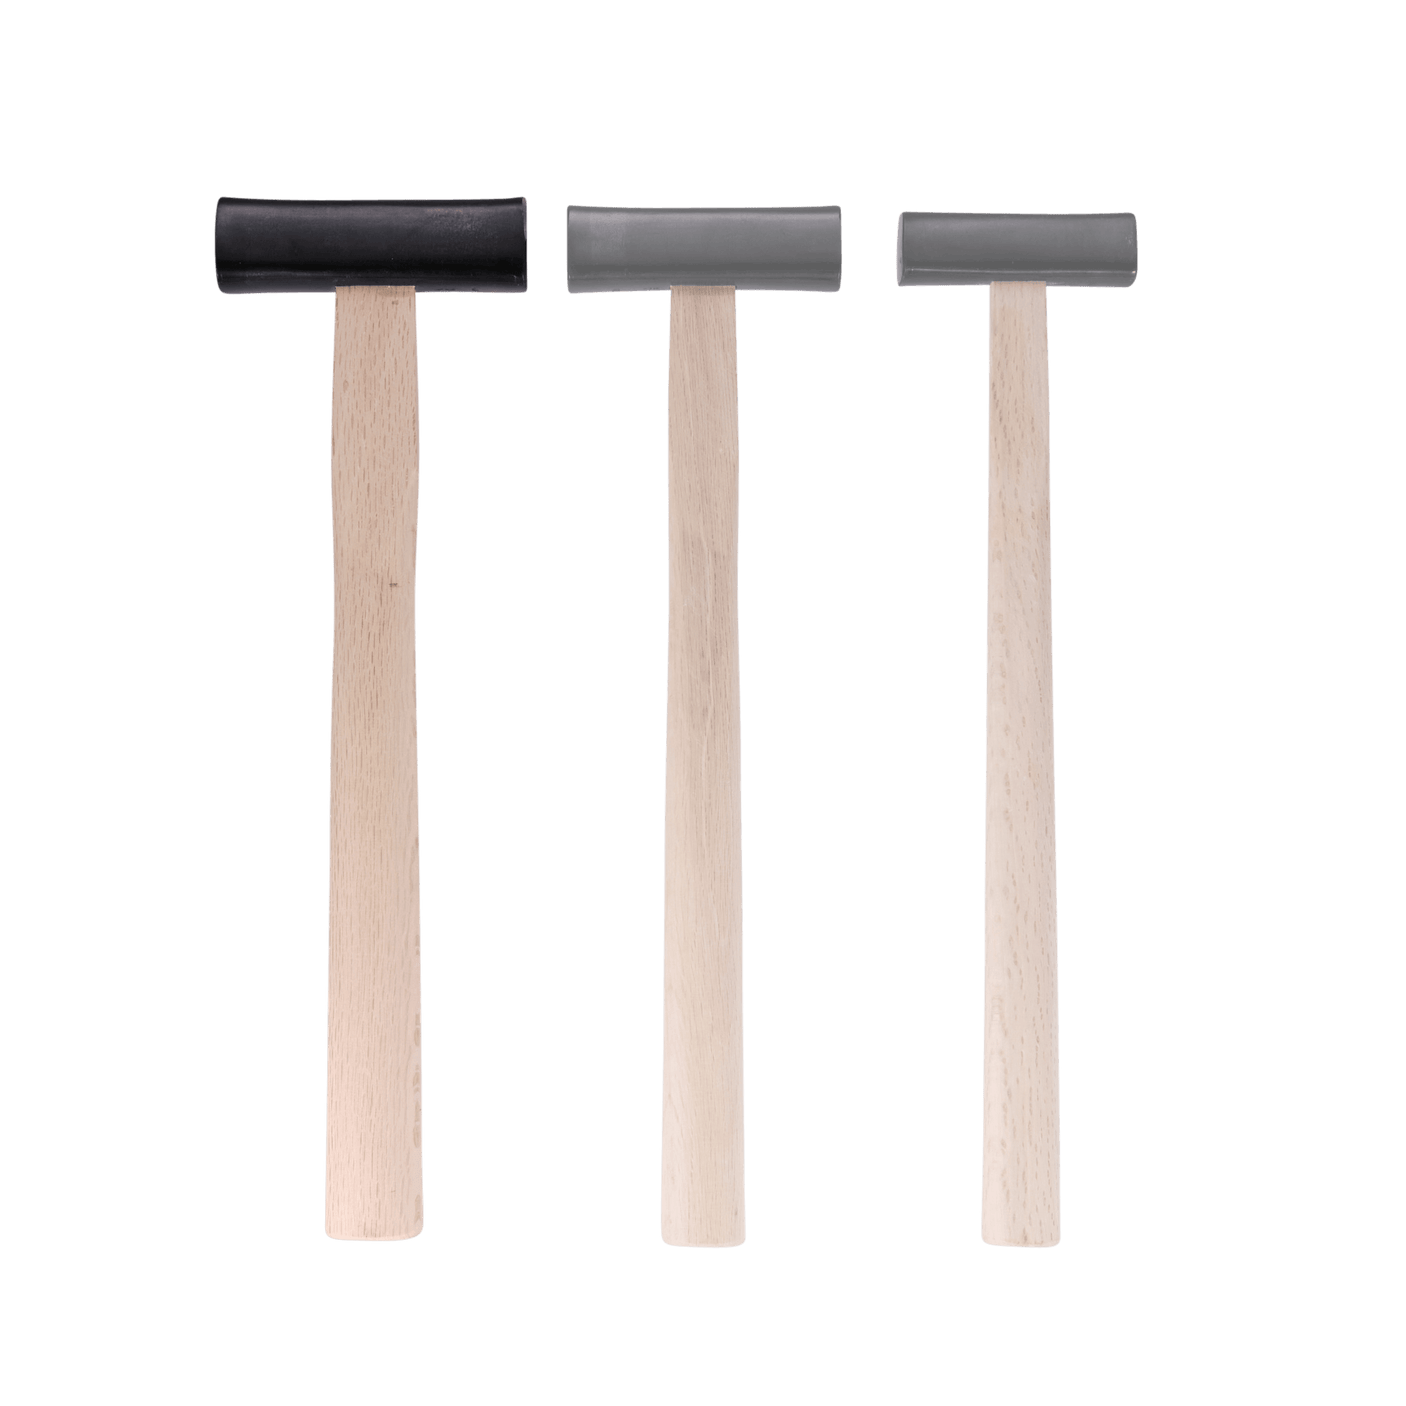 Tenryu Genno - Black Finish - 675g - Hammers - Japanese Tools Australia